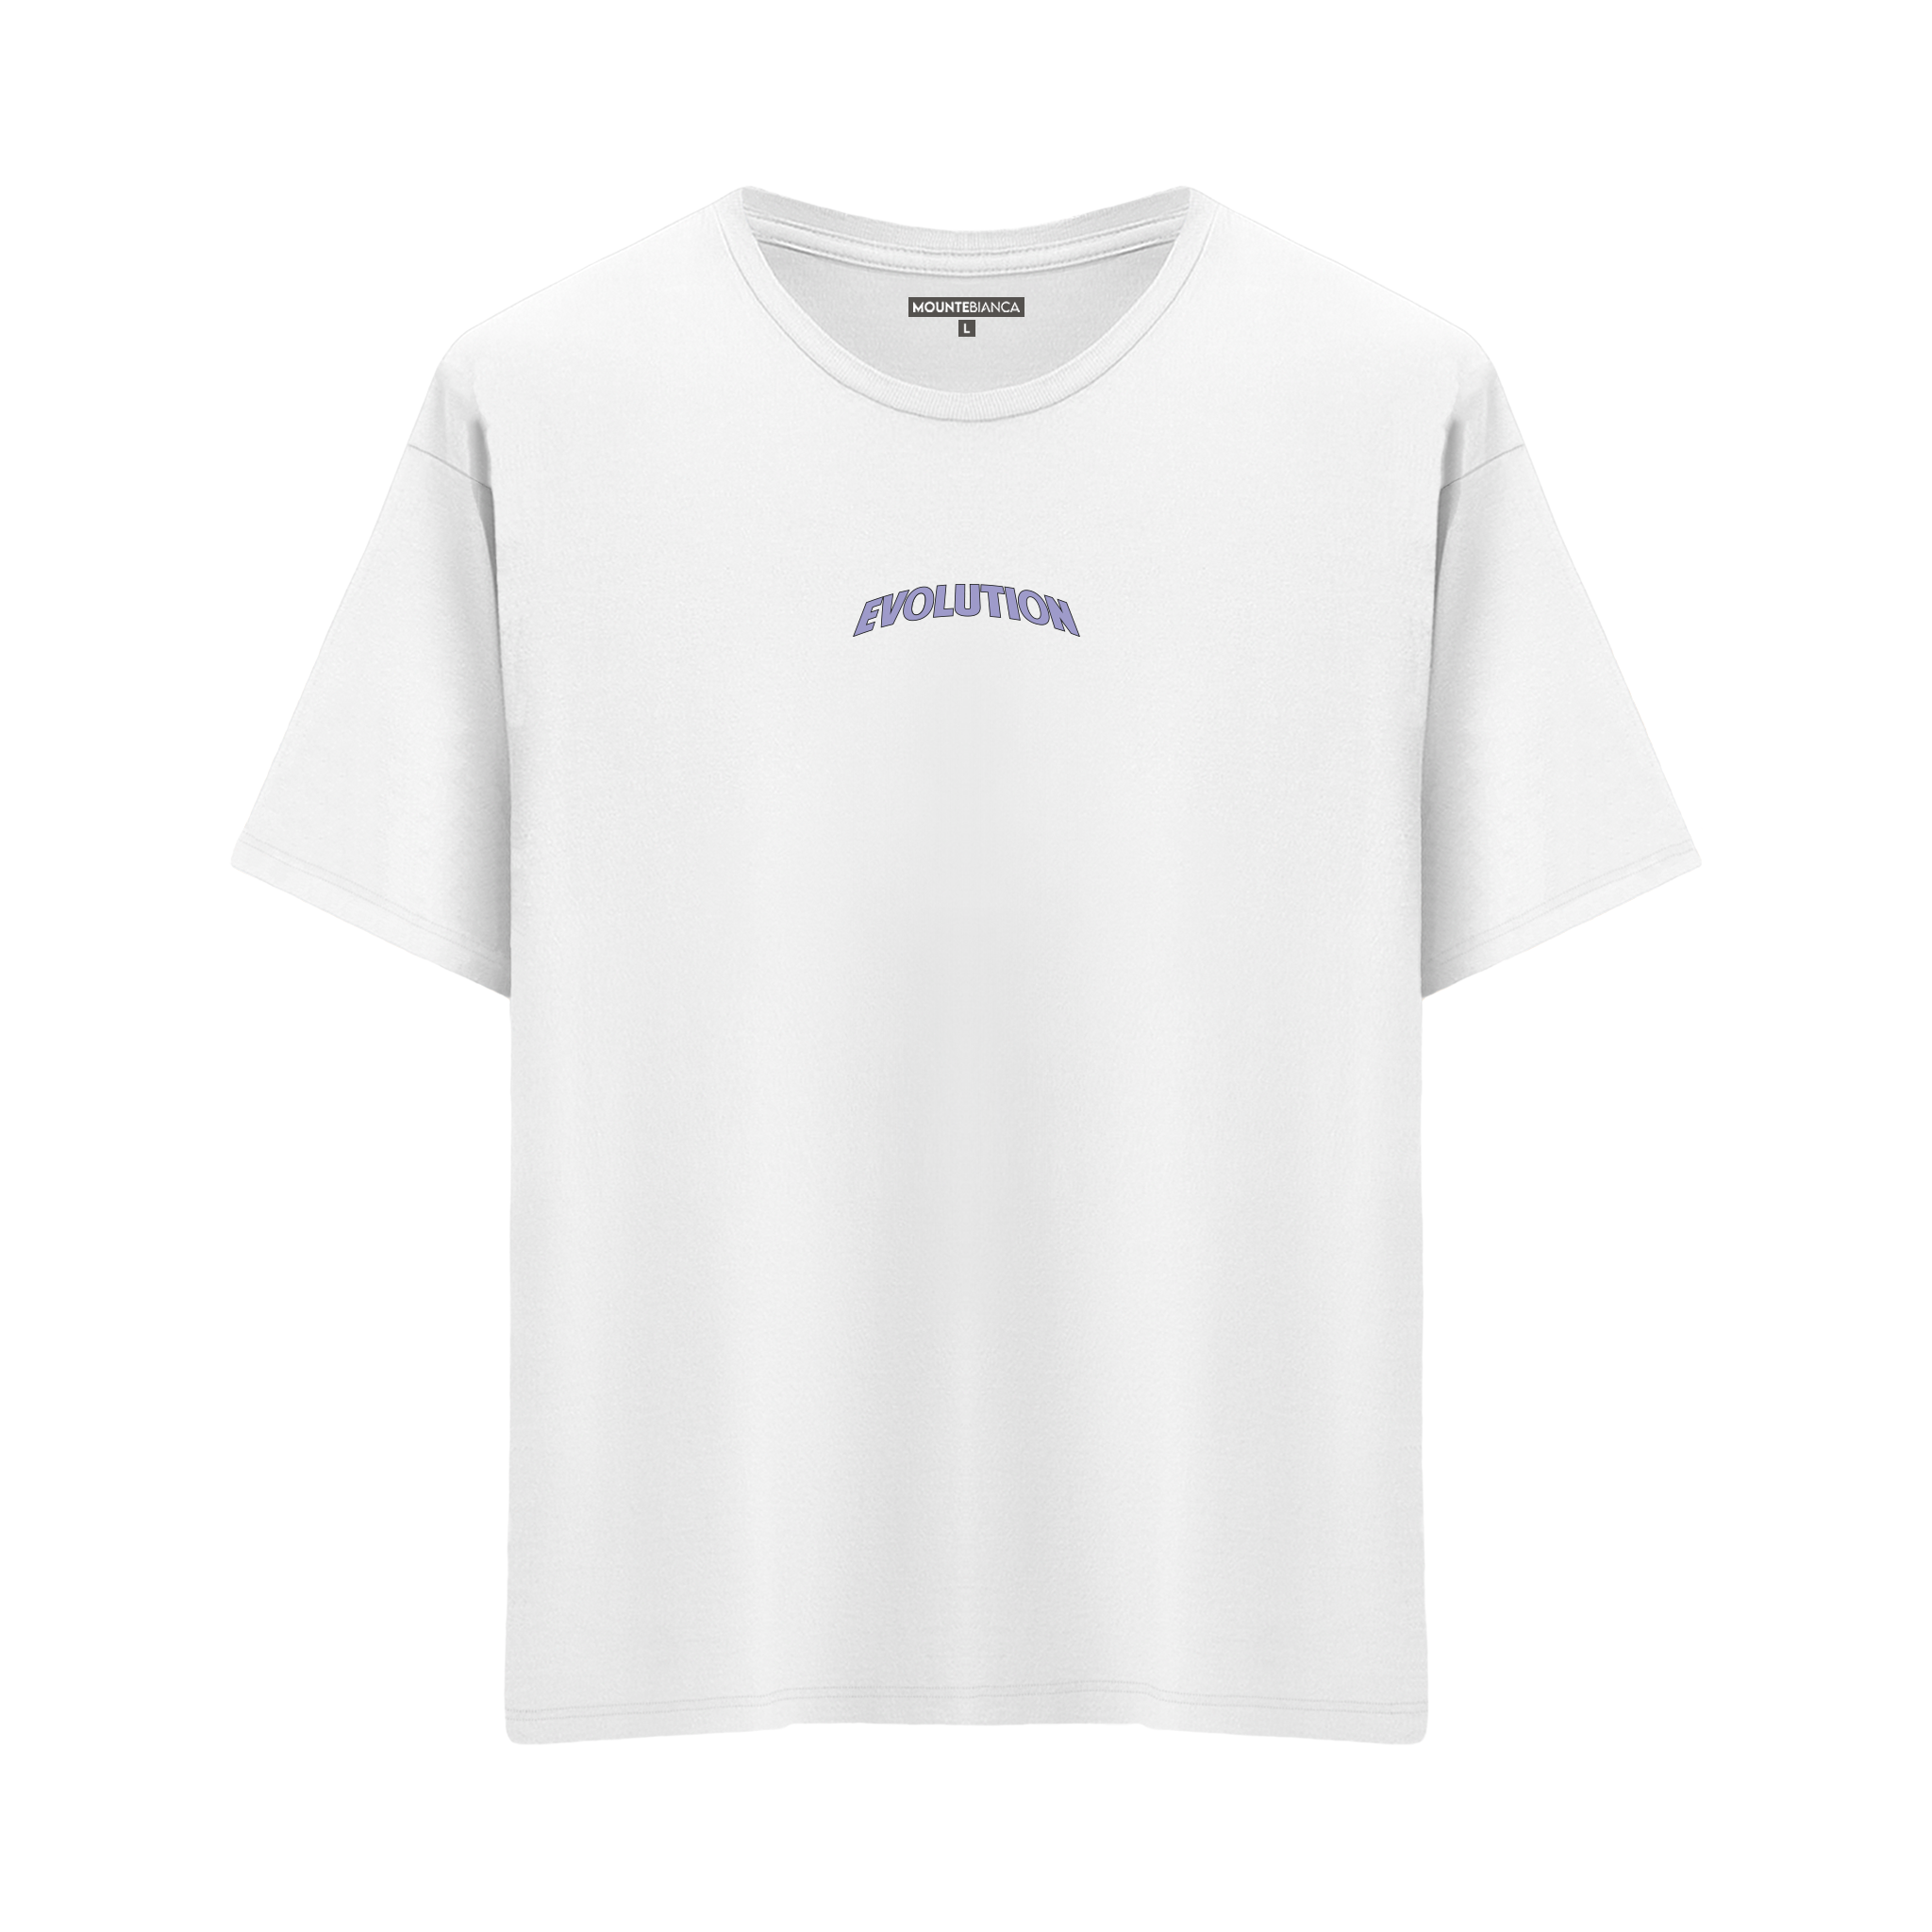 Evolution - Oversize T-shirt